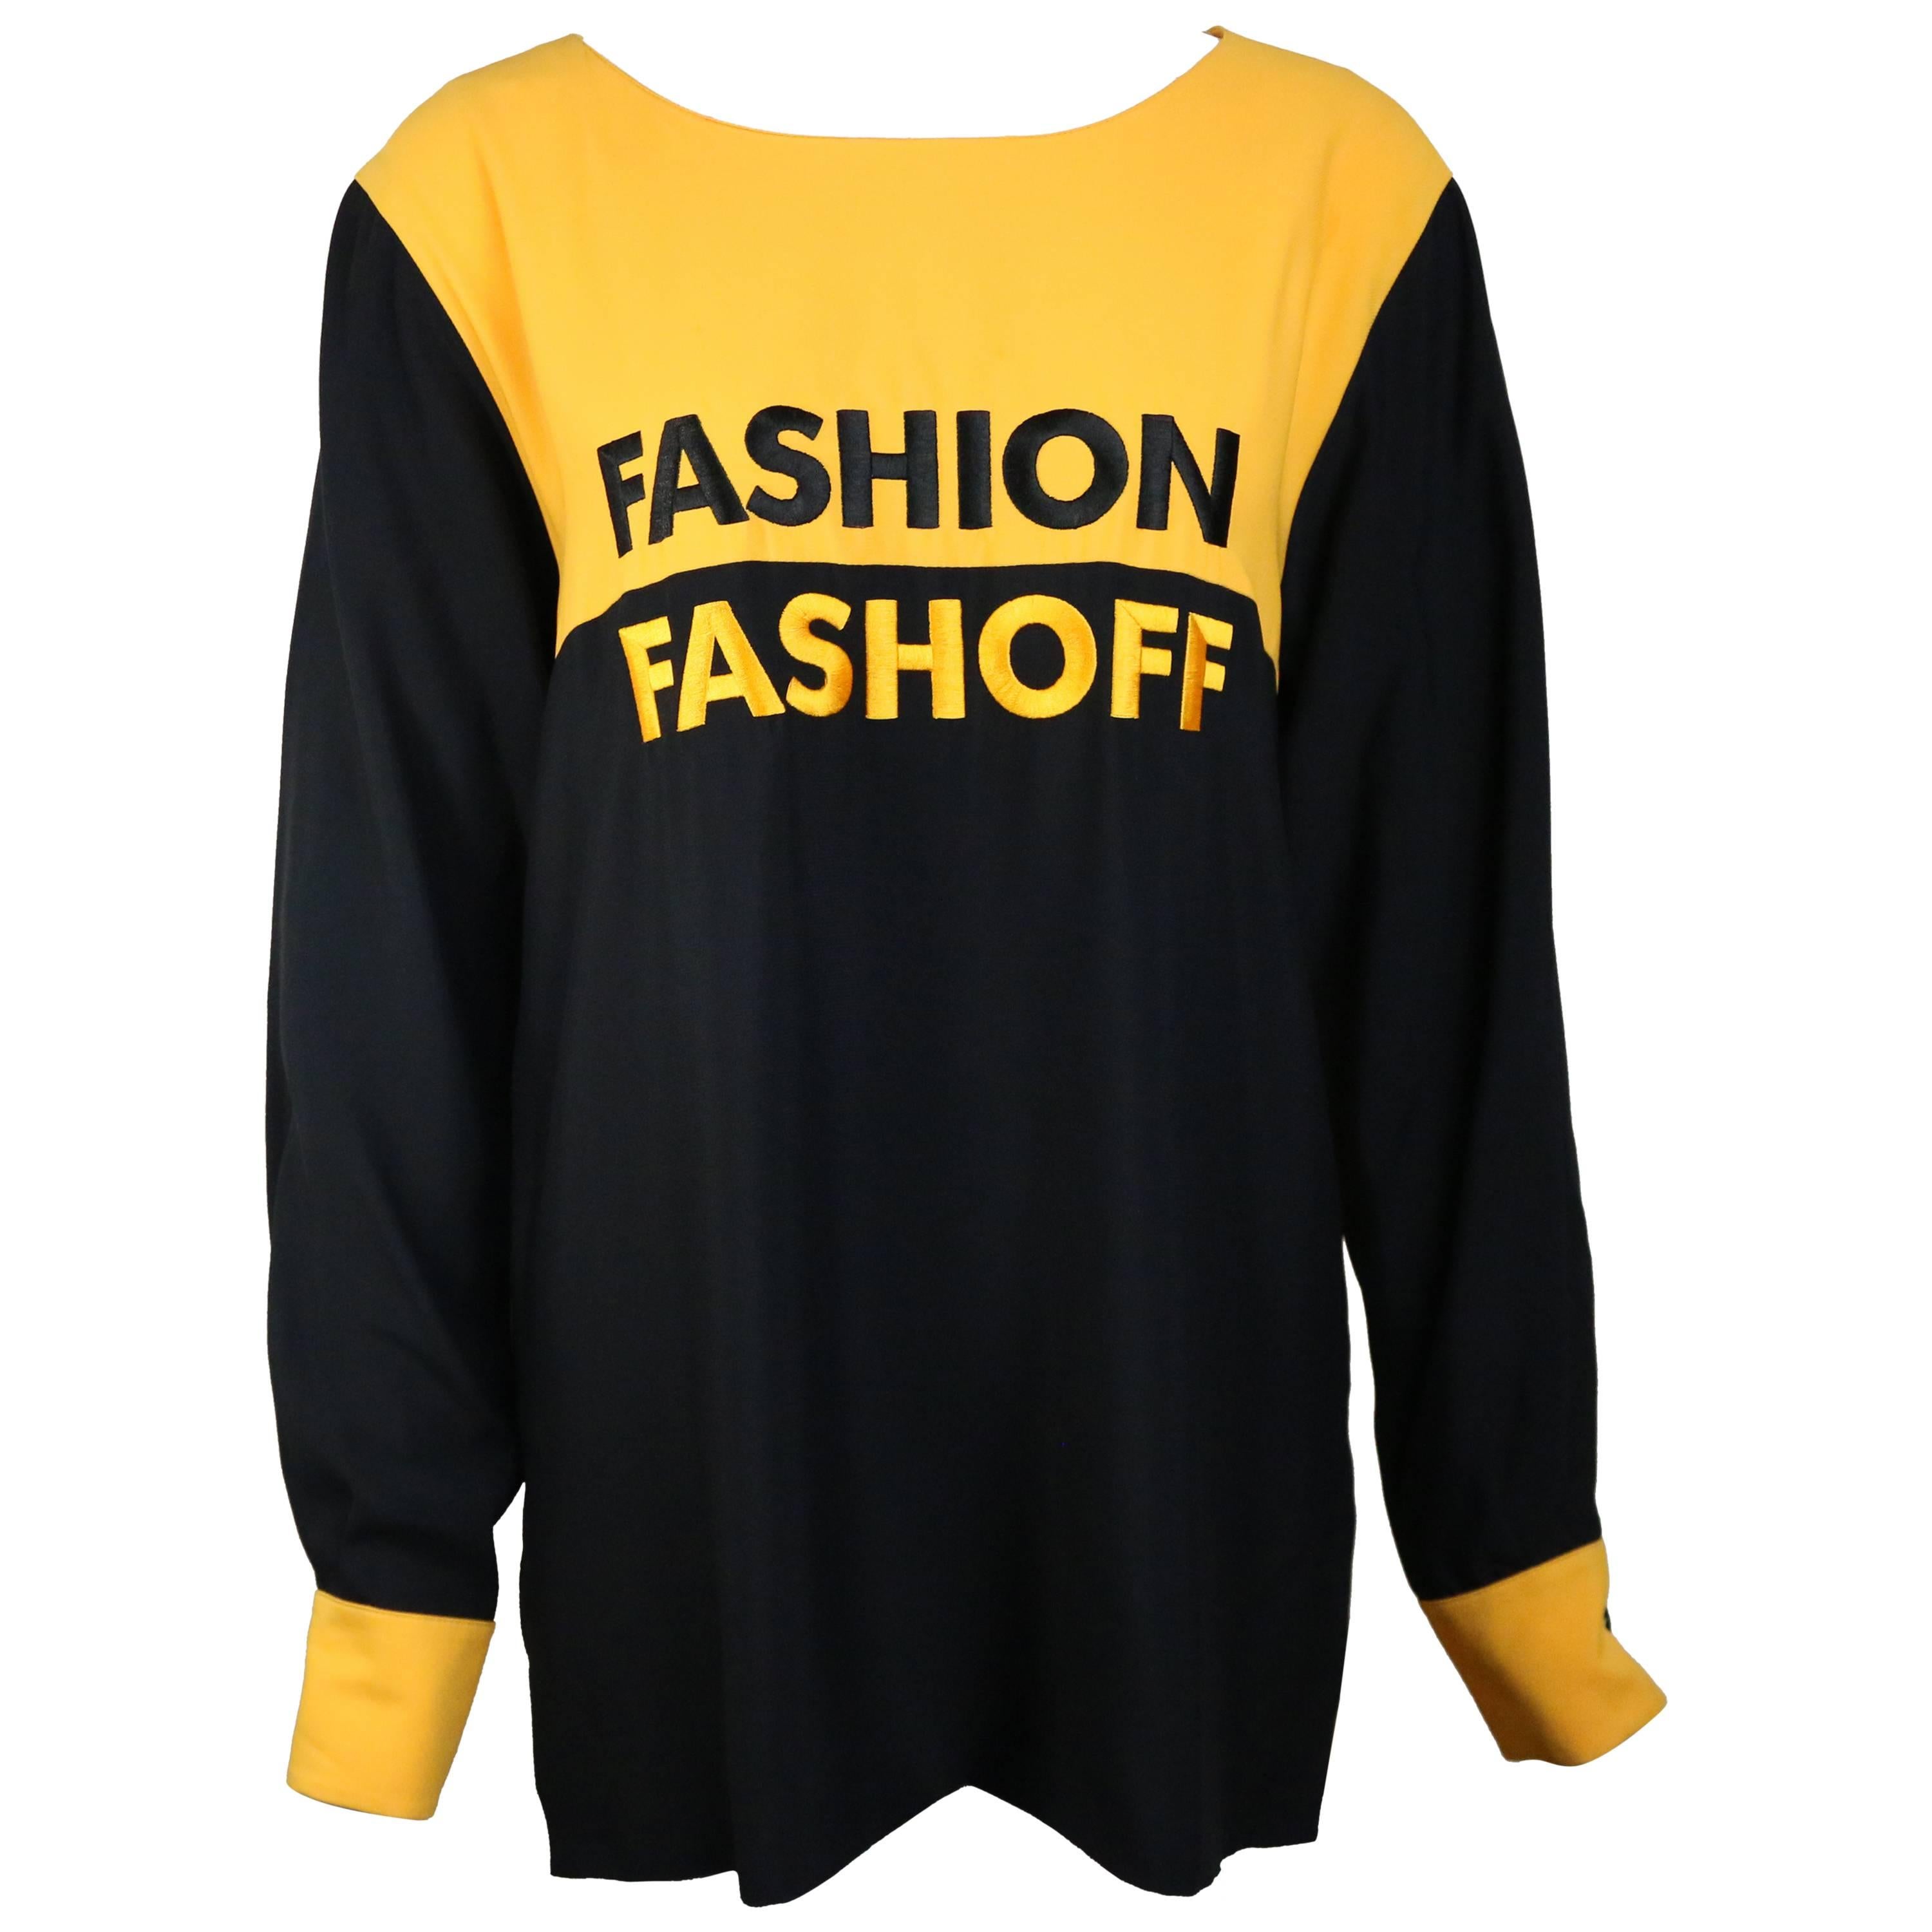 Moschino Couture Slogan „Fashion and Fashoff“ Langarmblusen mit Farbblockmuster im Angebot